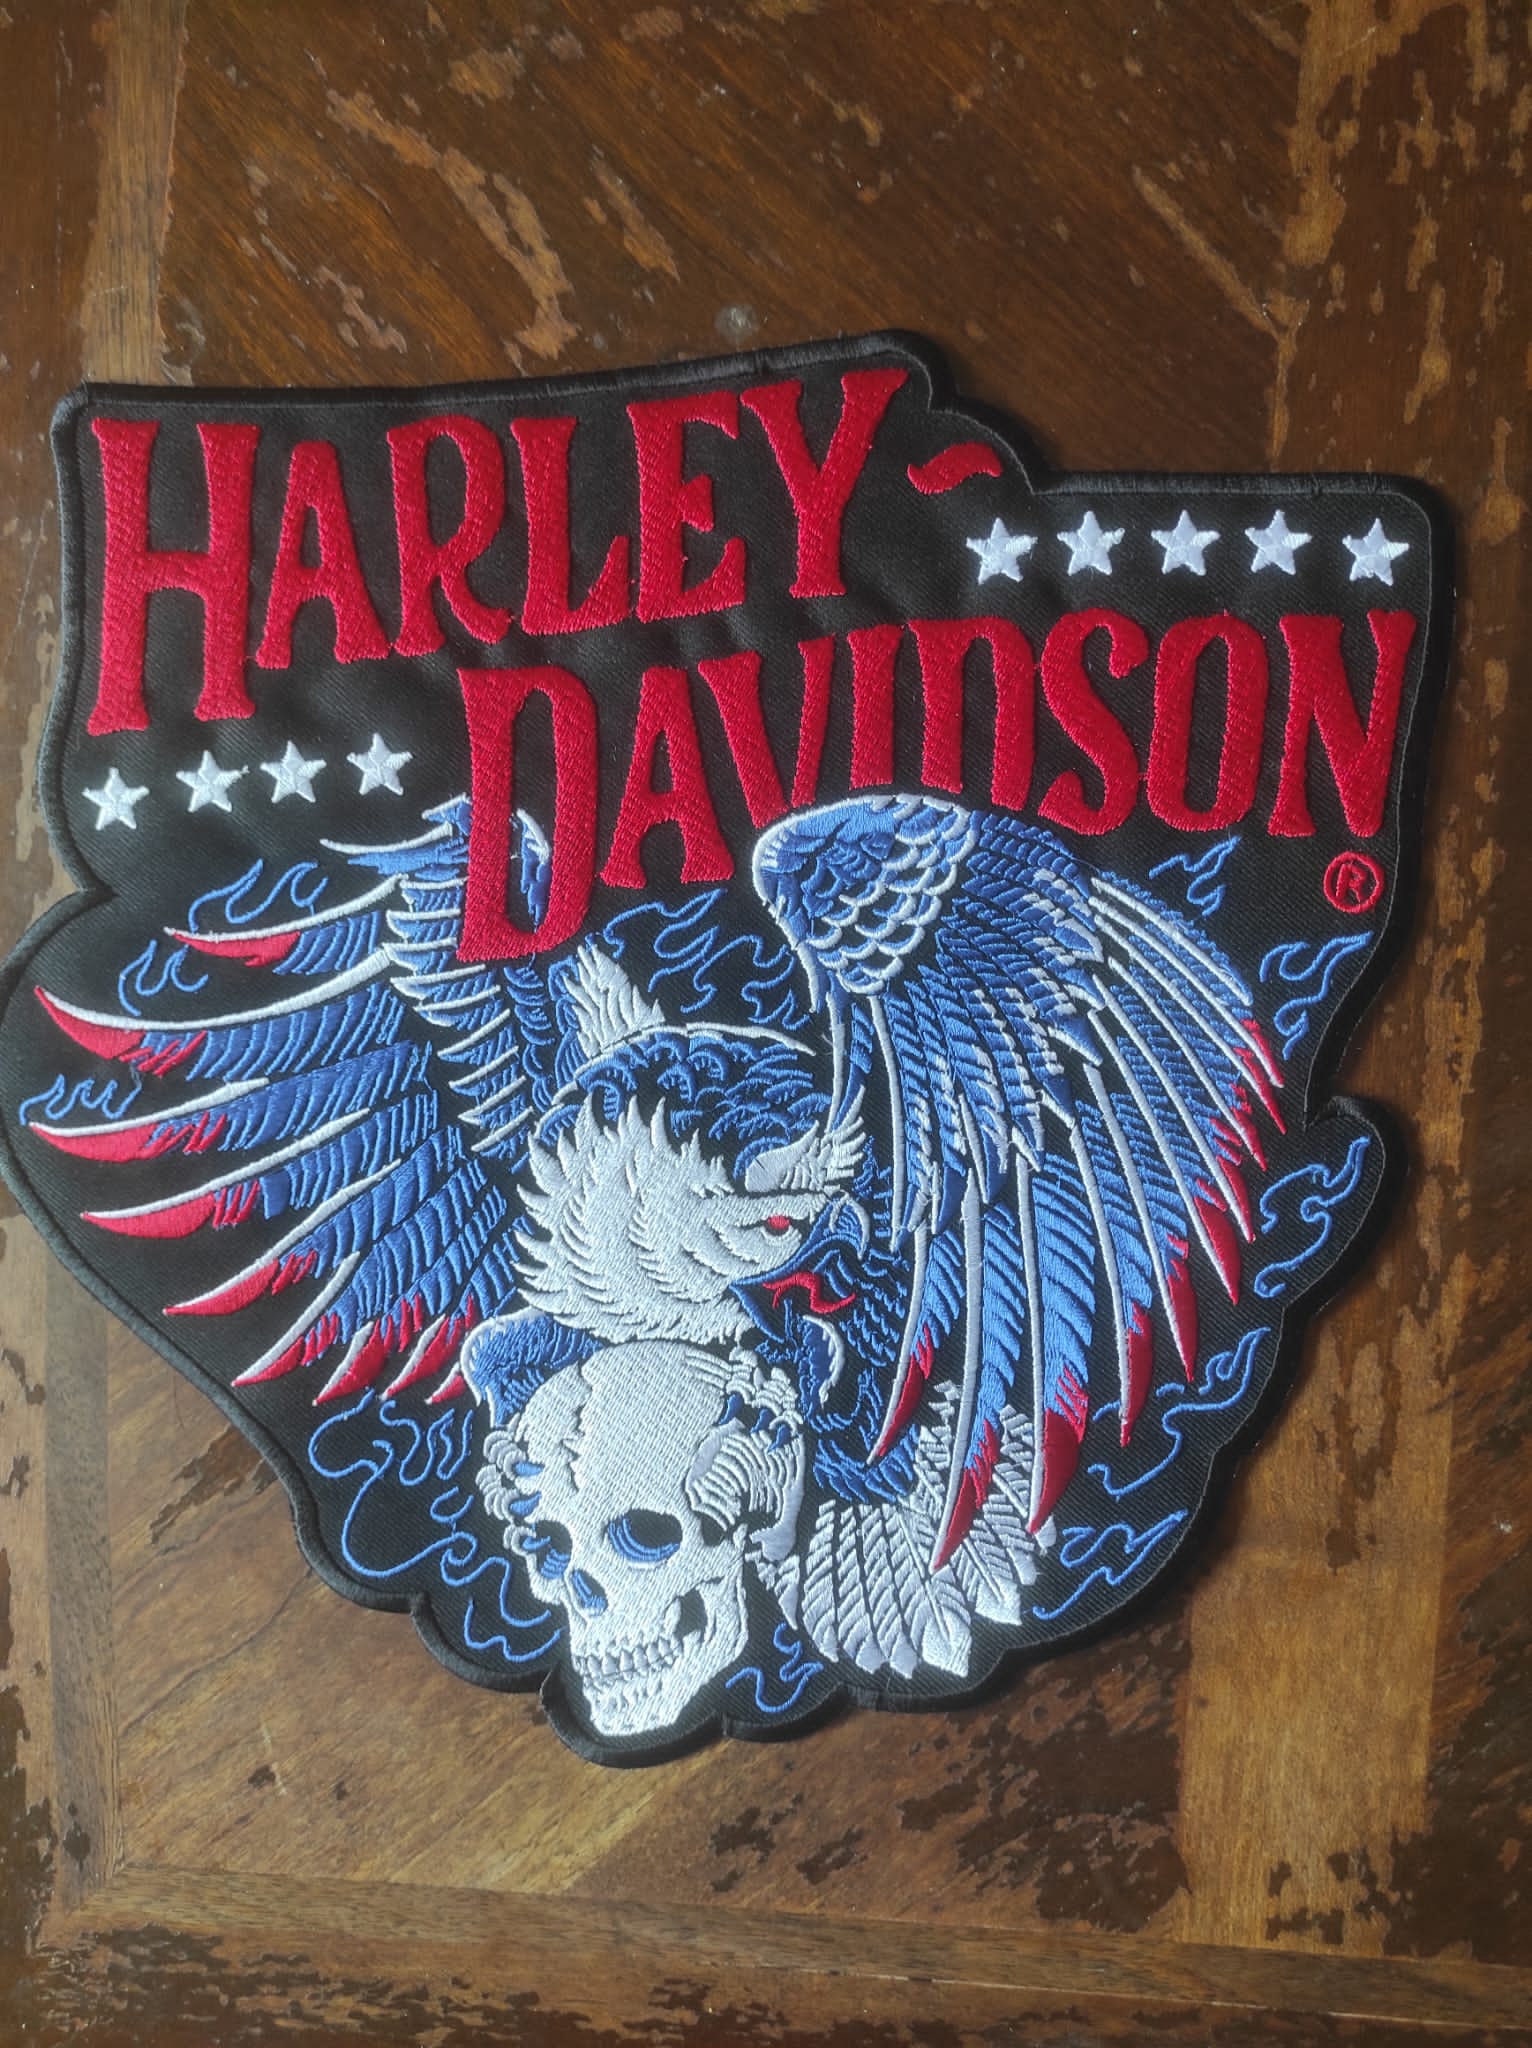 Medium Motorcycle Harley Davidson Eagle Iron On Patch